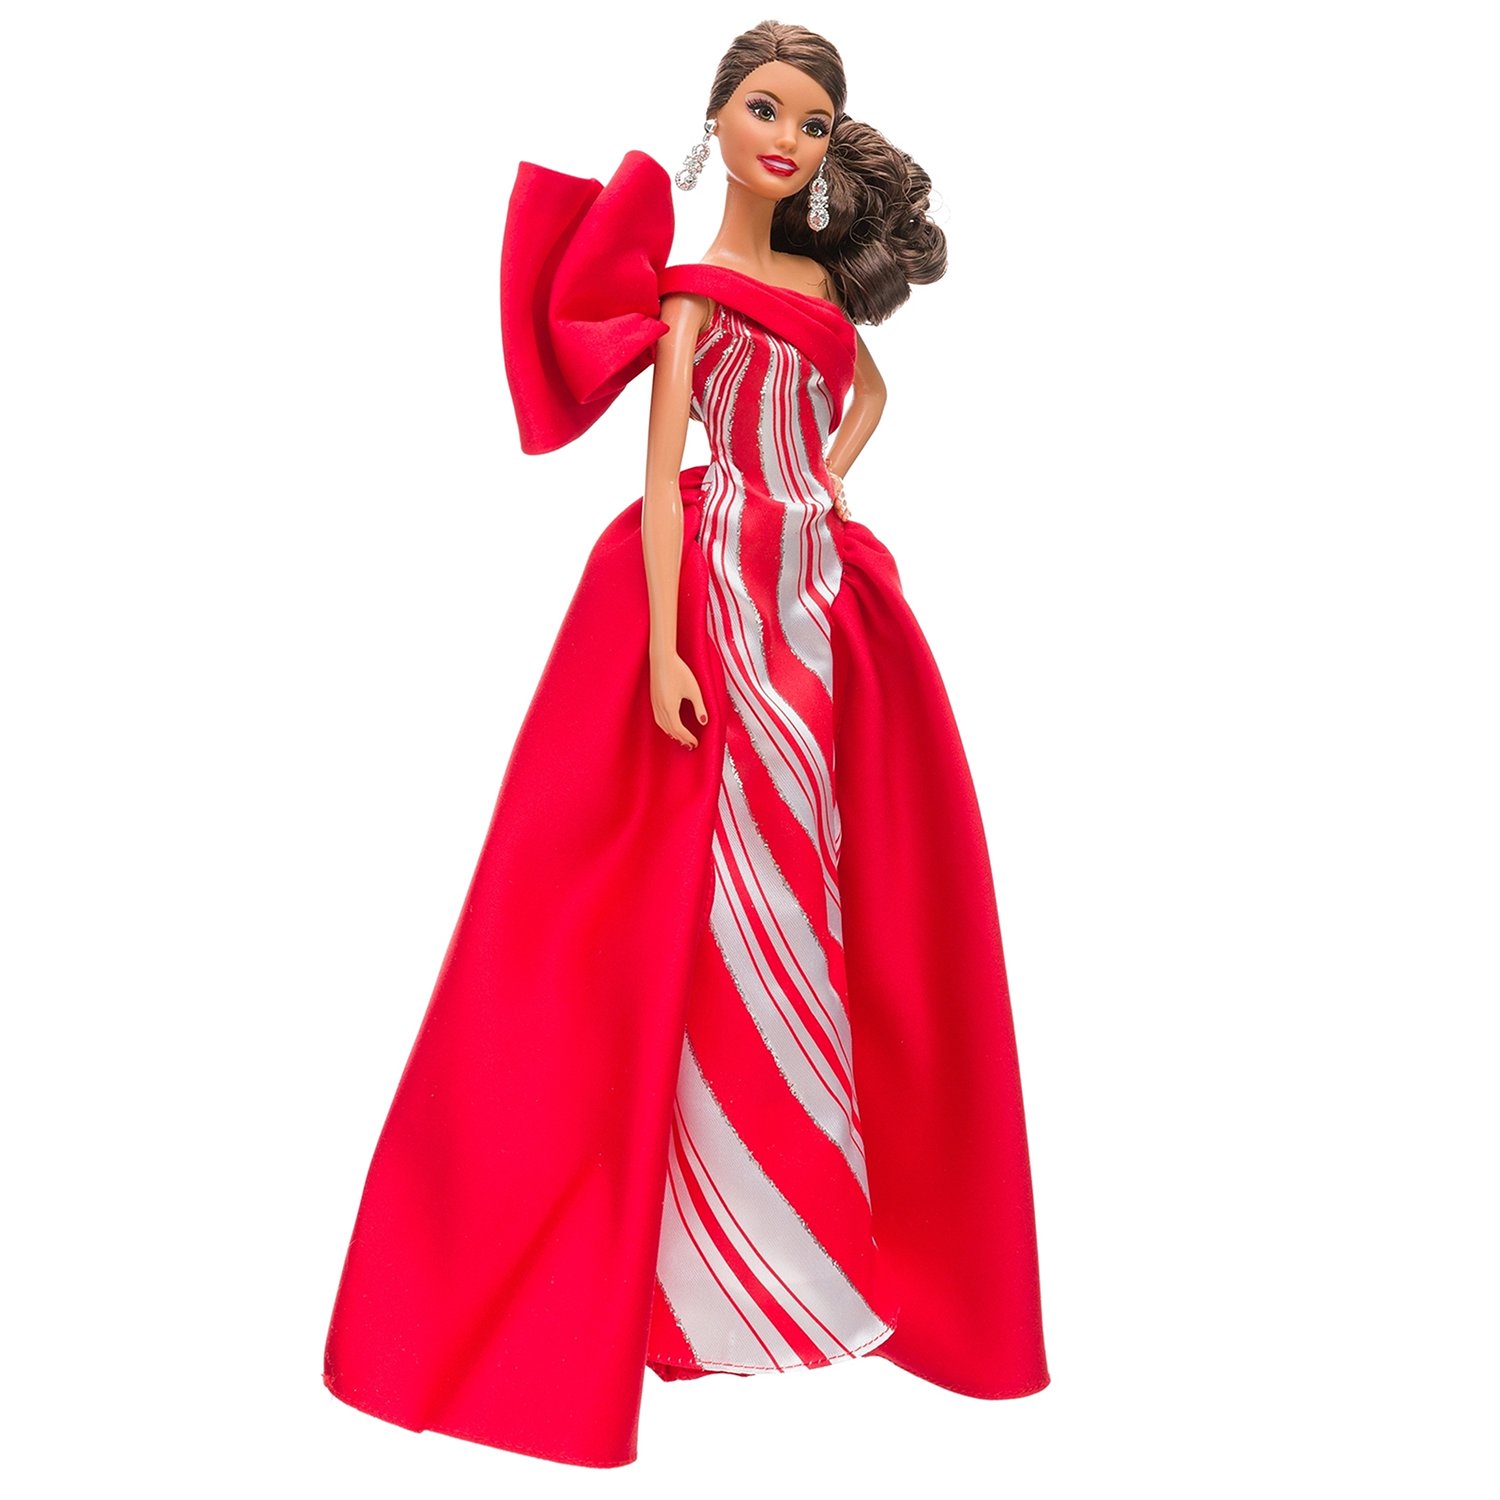 Кукла Barbie Праздничная 2019 Шатенка, FXF03